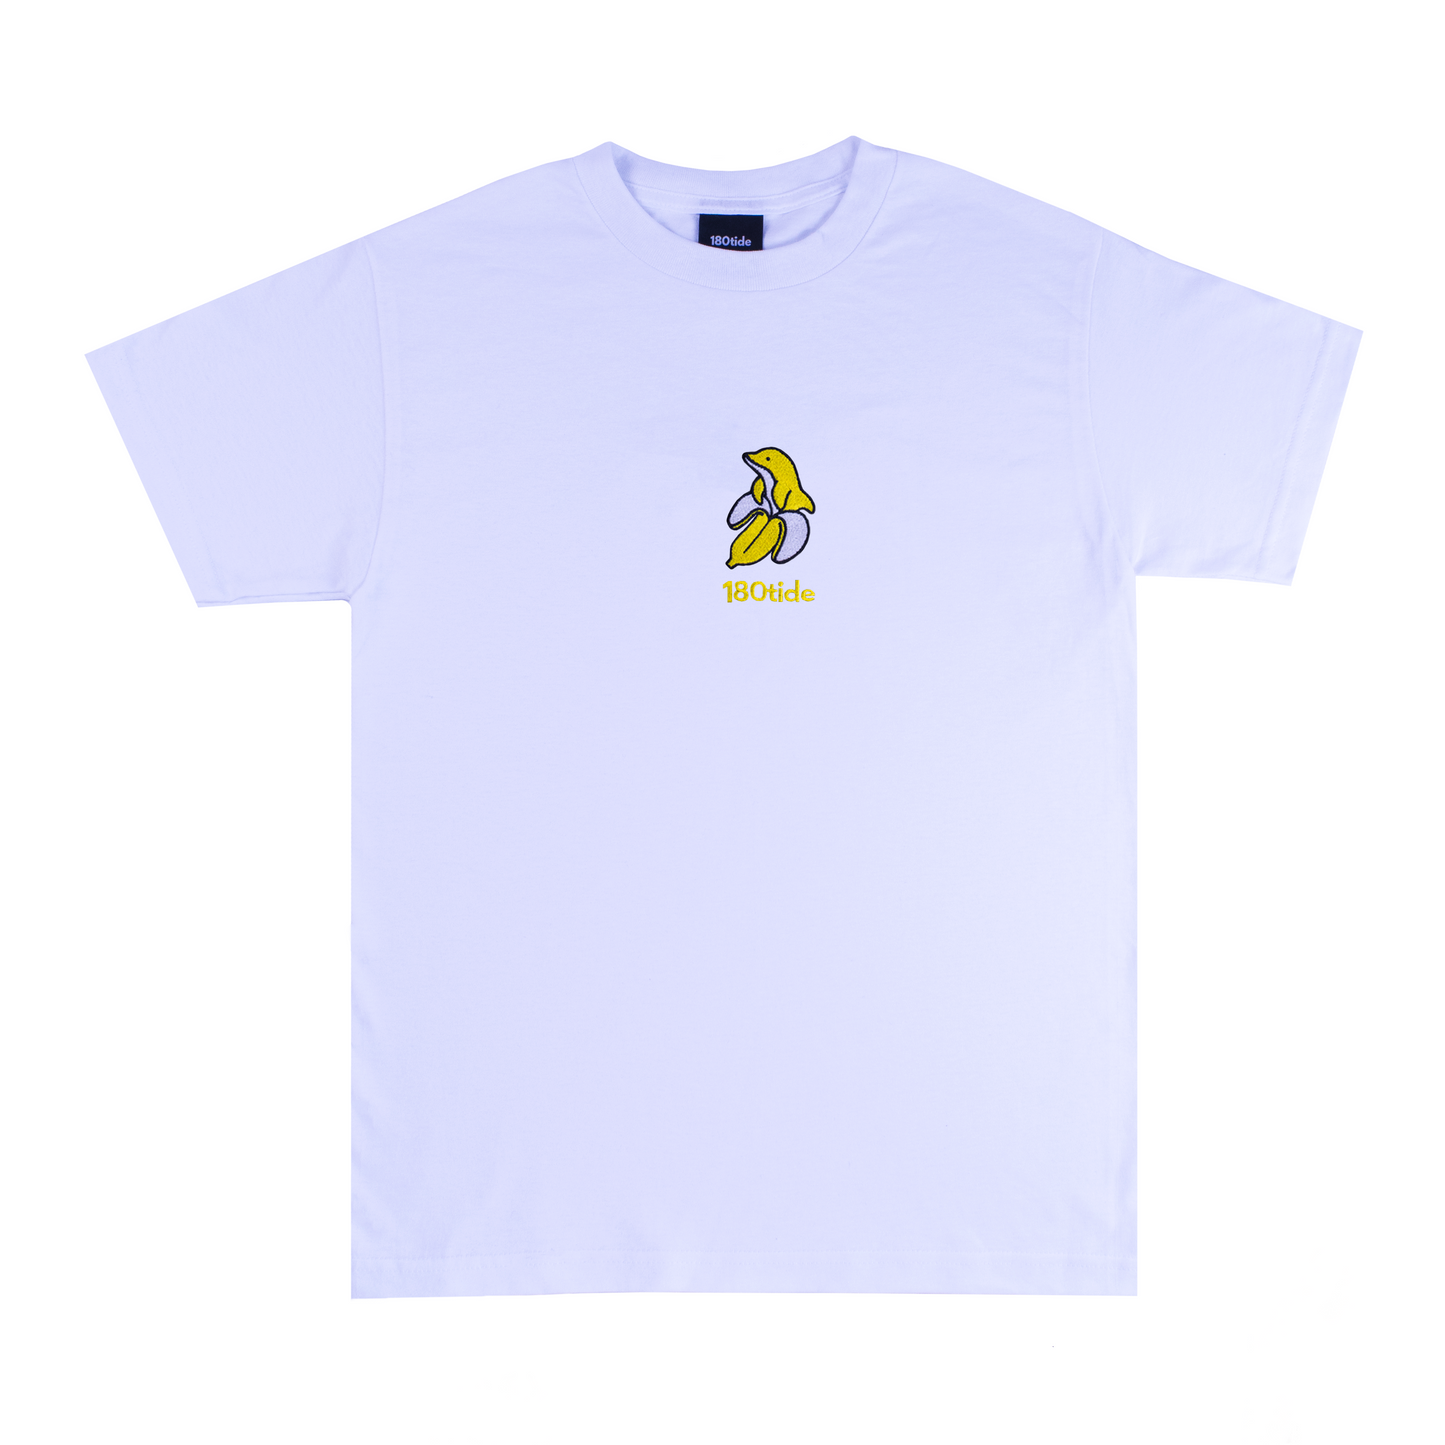 BanDan the Banana Dolphin Embroidered Logo White Short Sleeve Tee – 180tide